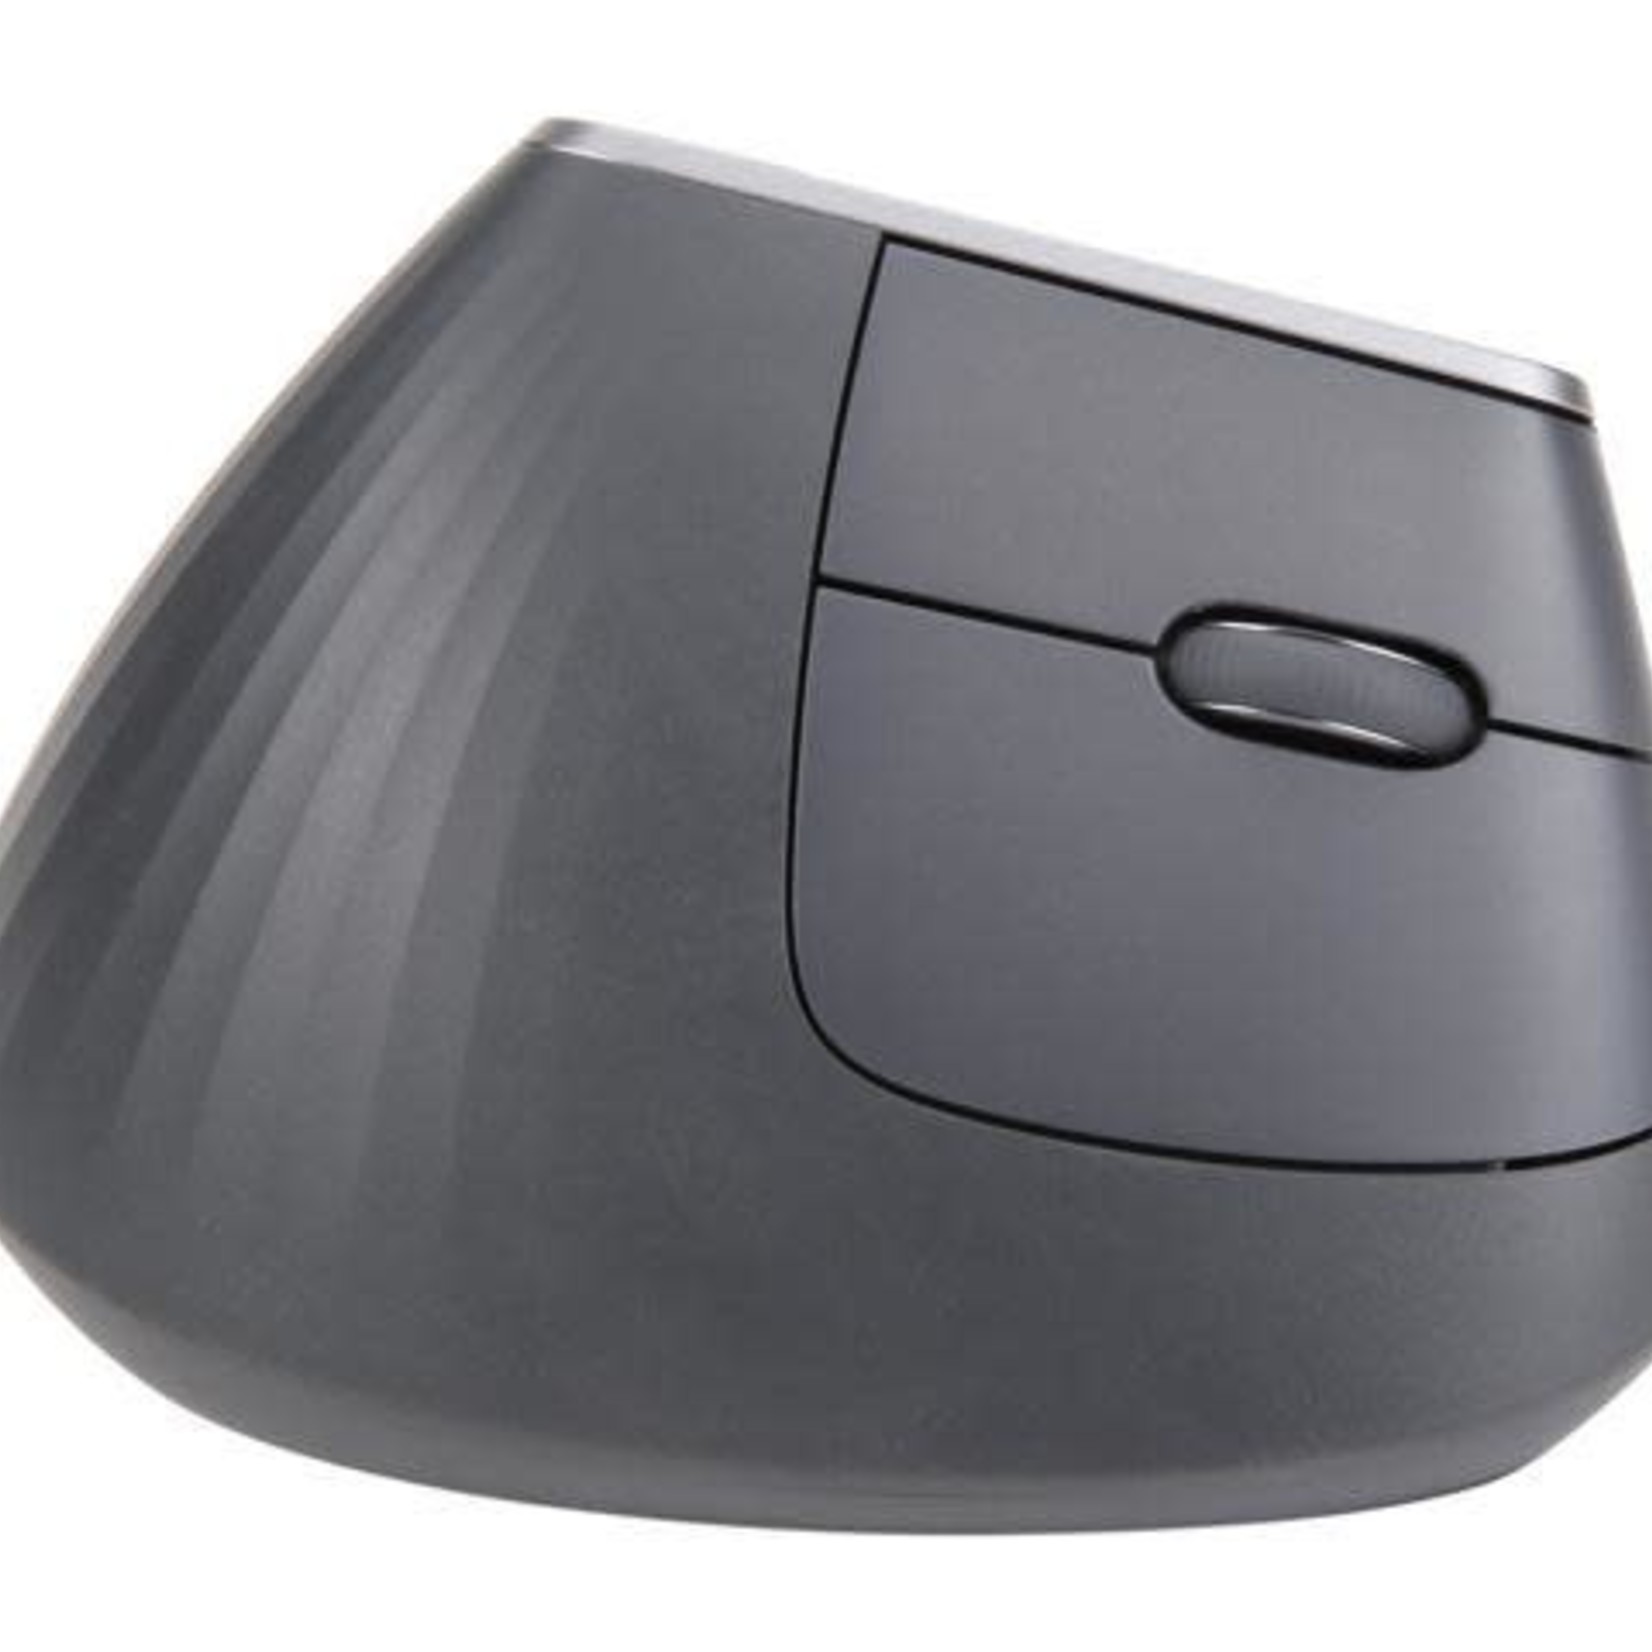 Logitech MX Vertical Wireless Mouse